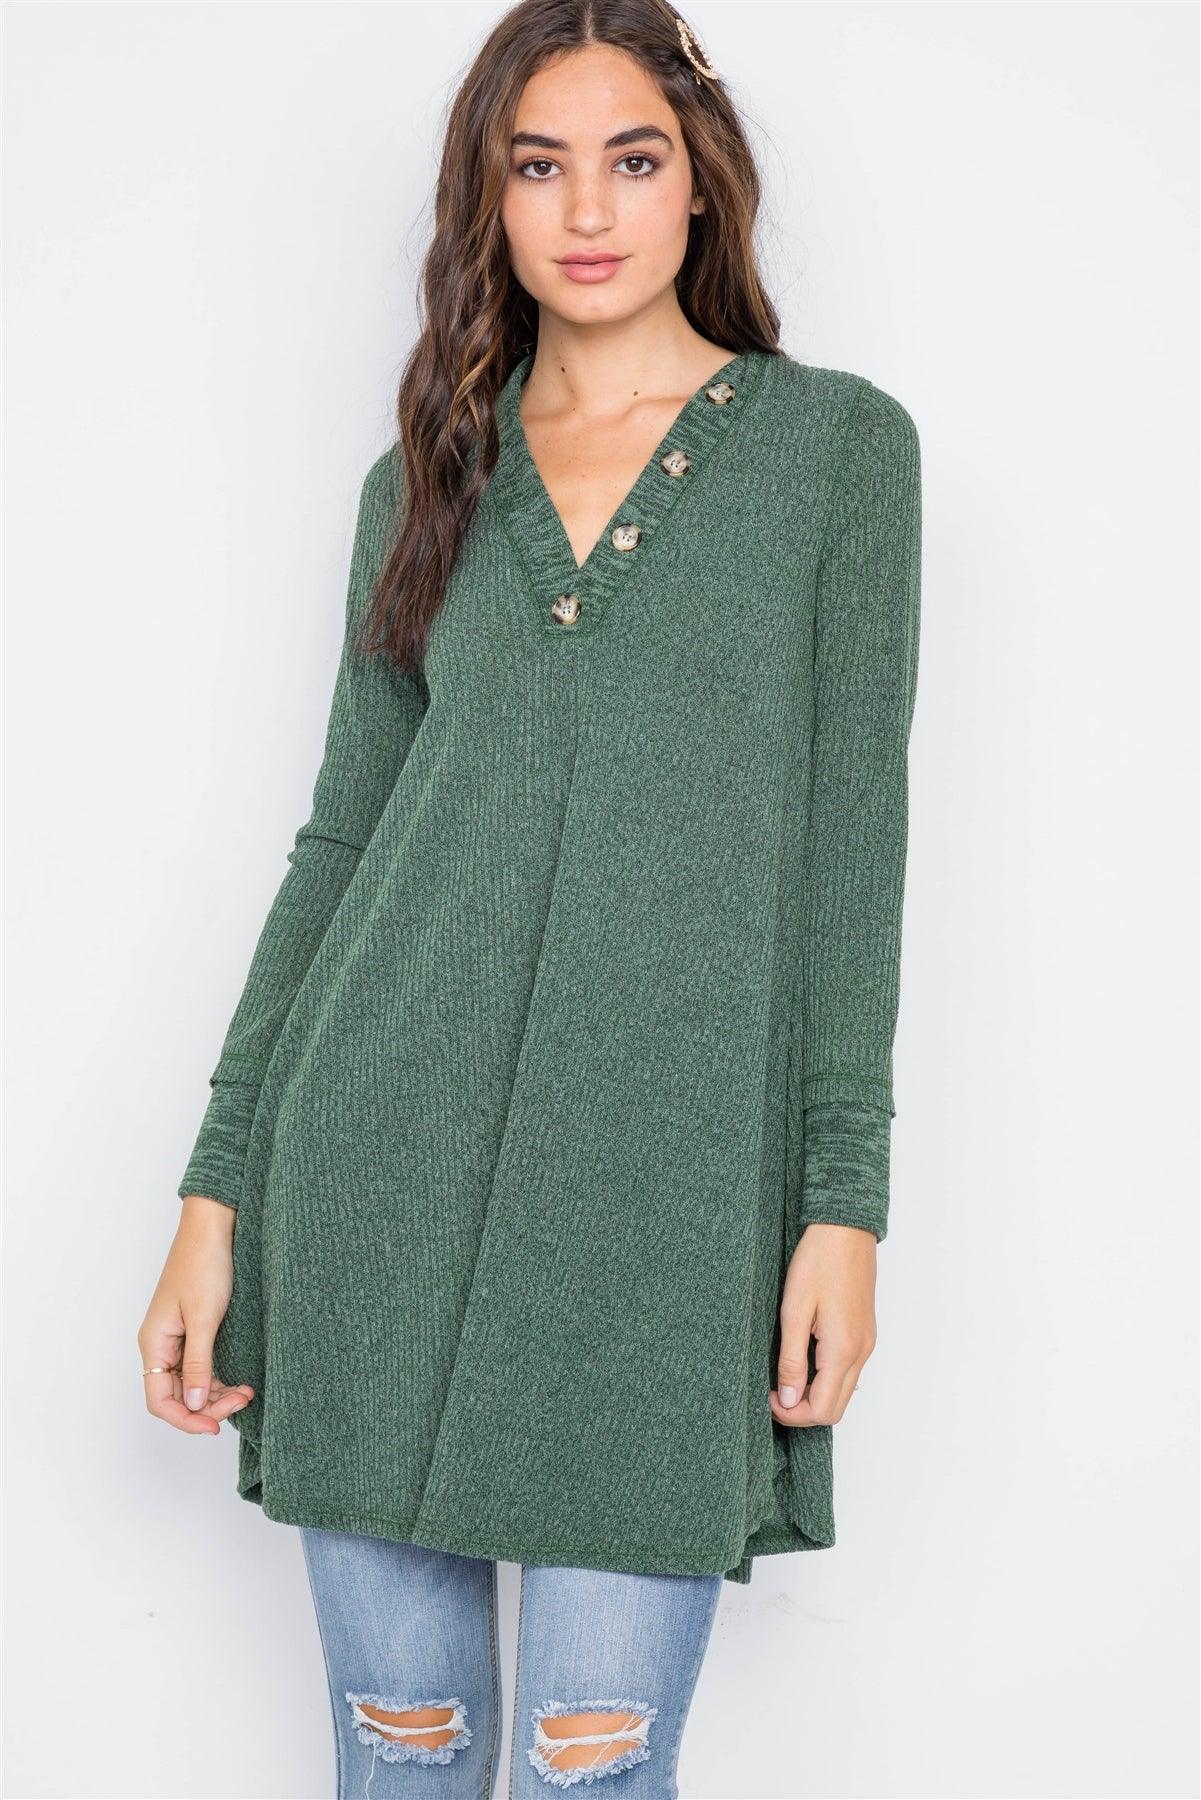 Hunter Green Knit Long Sleeve Sweater Dress /2-2-2